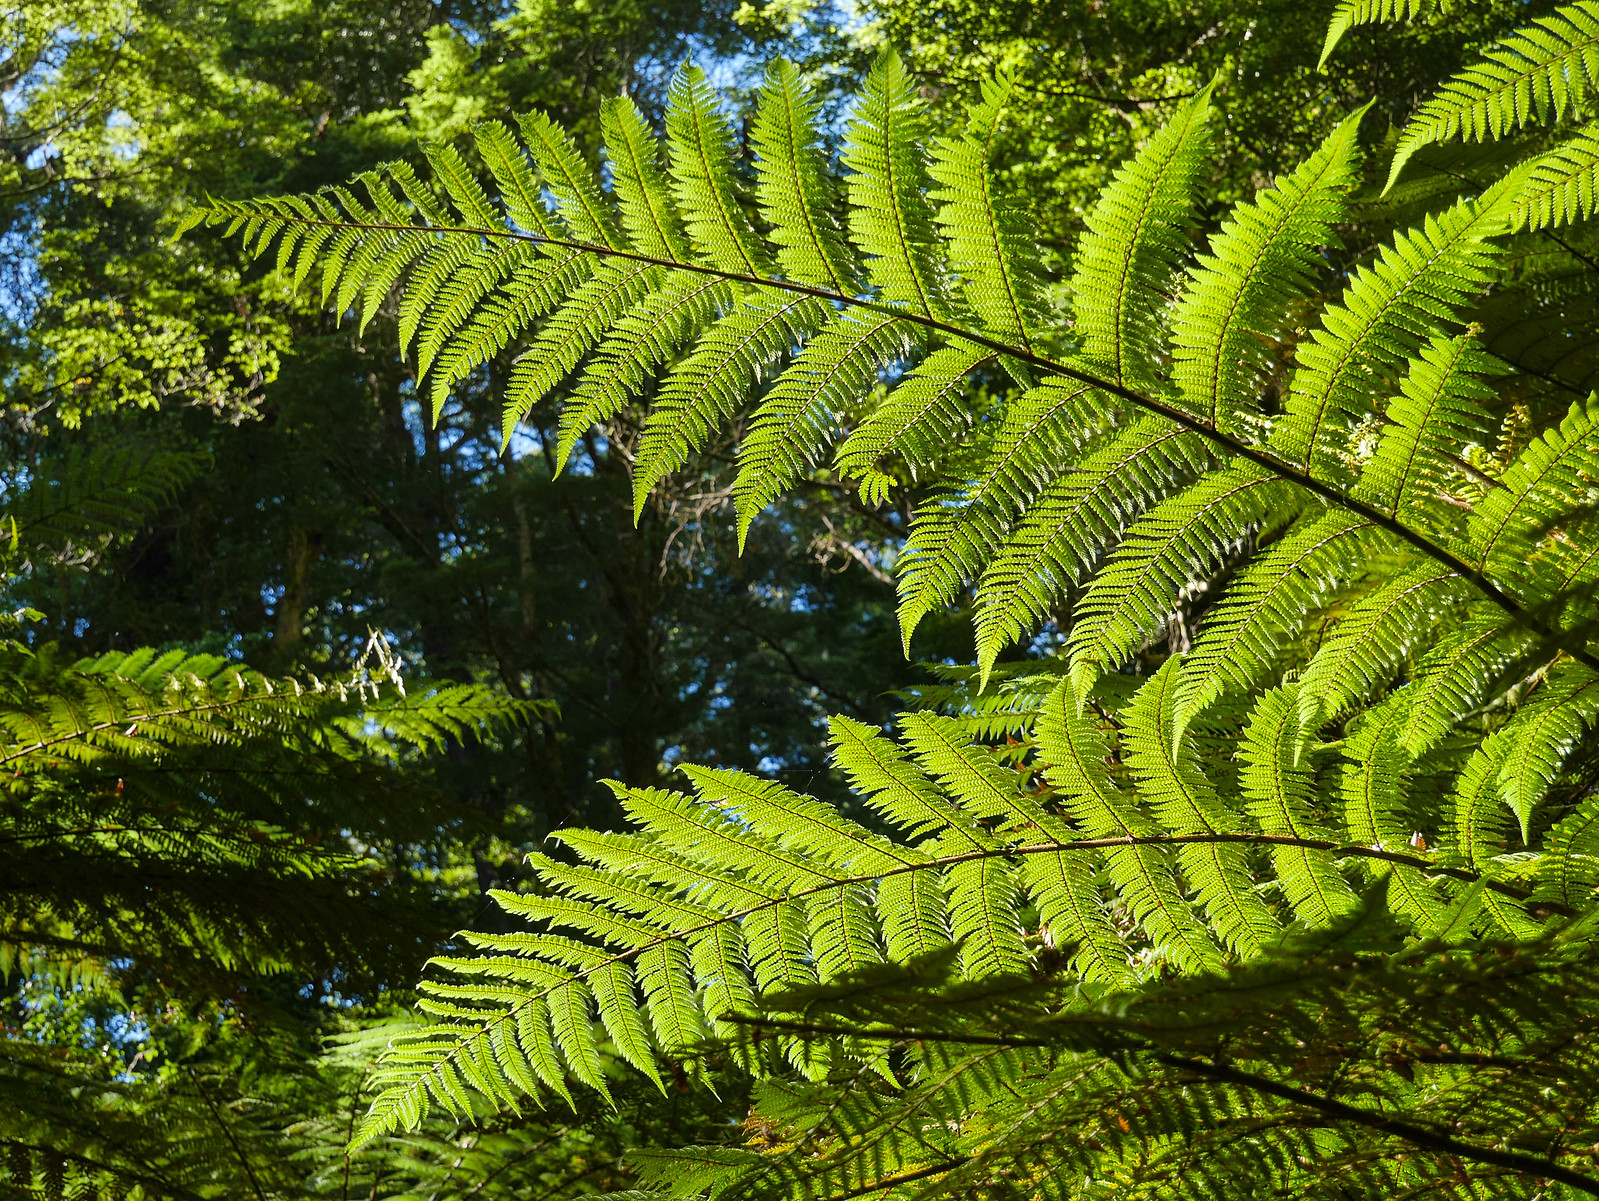 Tree ferns